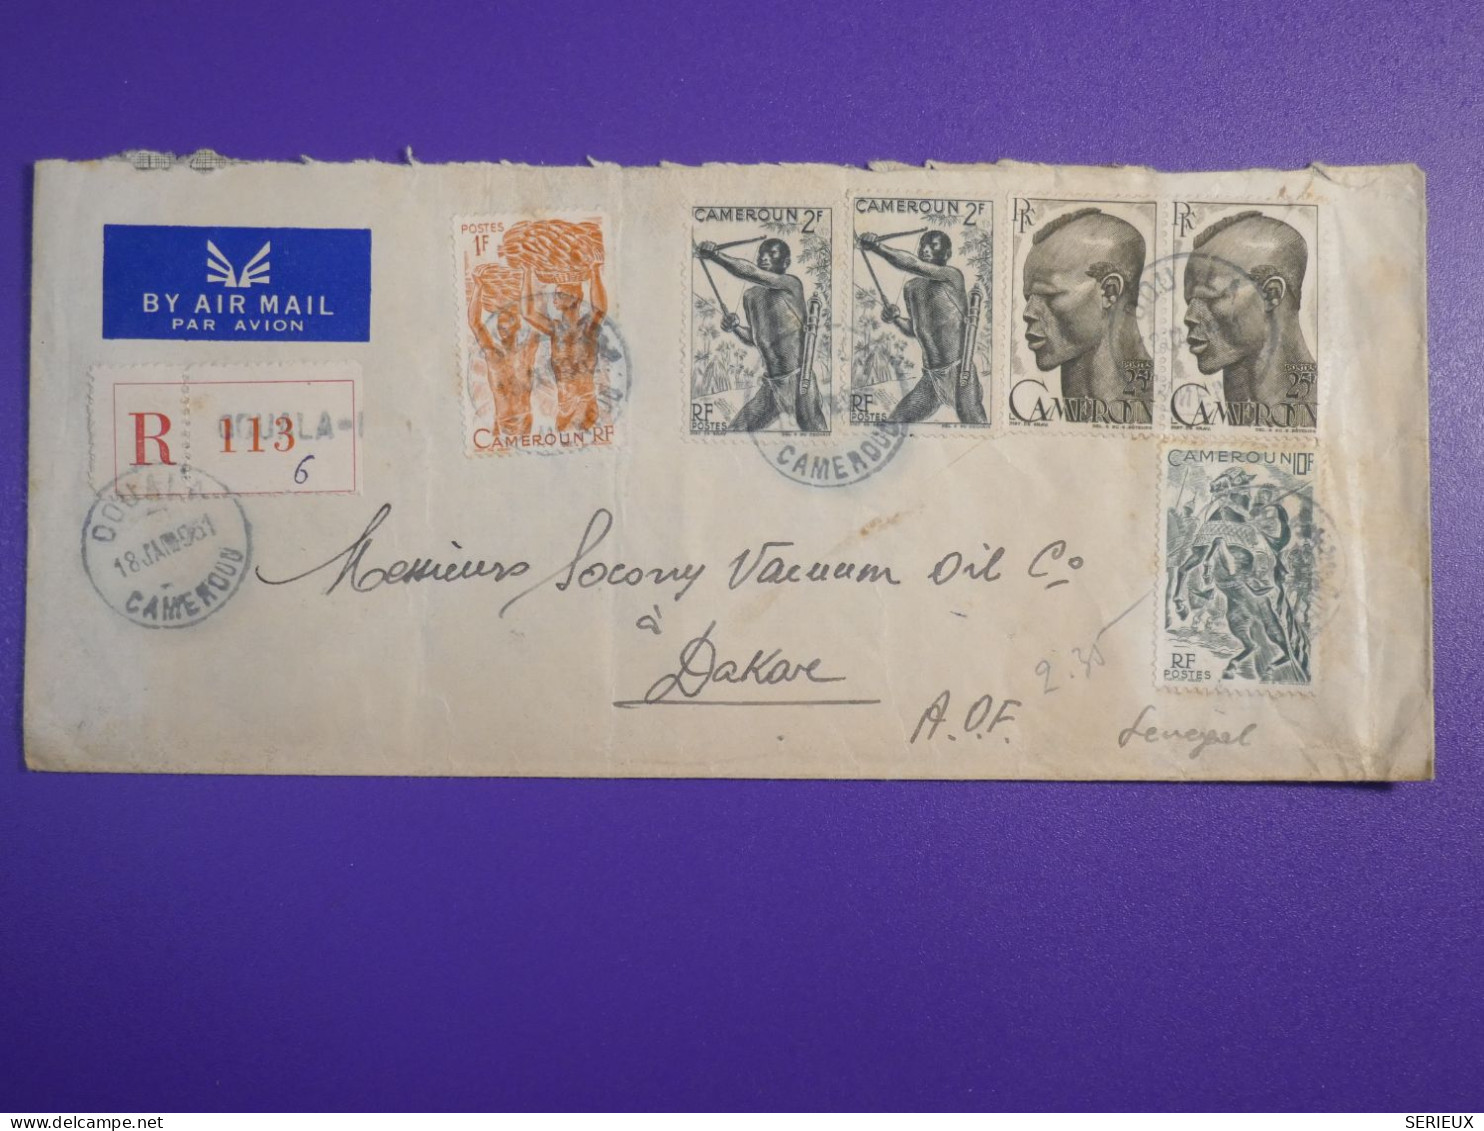 DL2  CAMEROUN  BELLE  LETTRE   1951   DOUALA  A  DAKAR   ++ ++ AFF. INTERESSANT+ - Covers & Documents